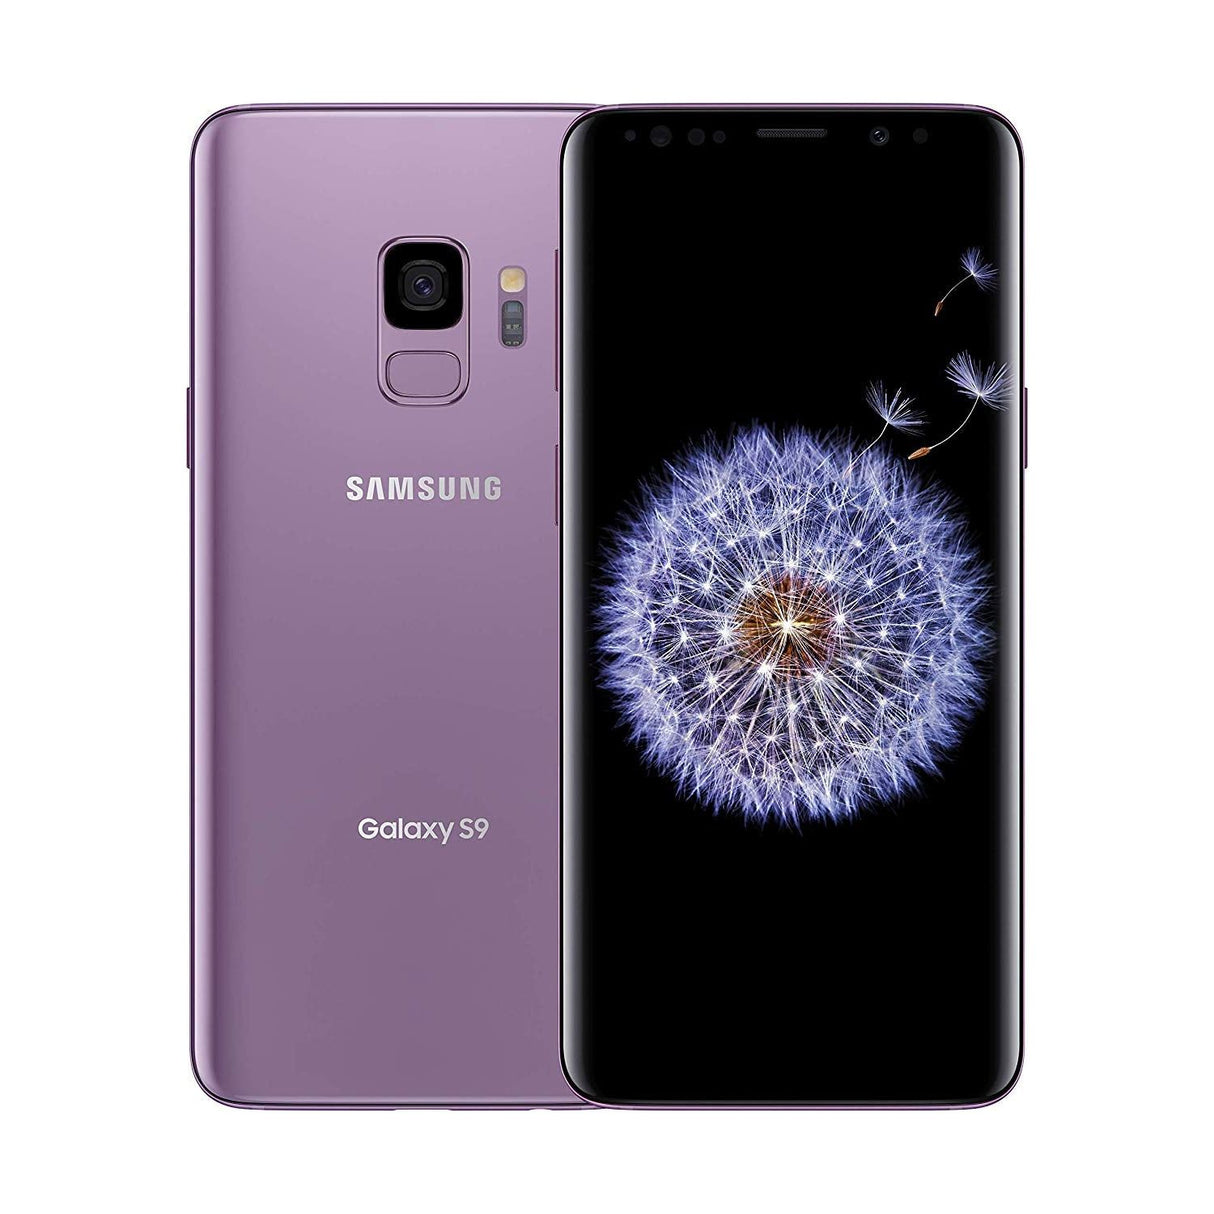 Samsung Galaxy S9 - 64 GB - Lilac Purple - Unlocked - GSM